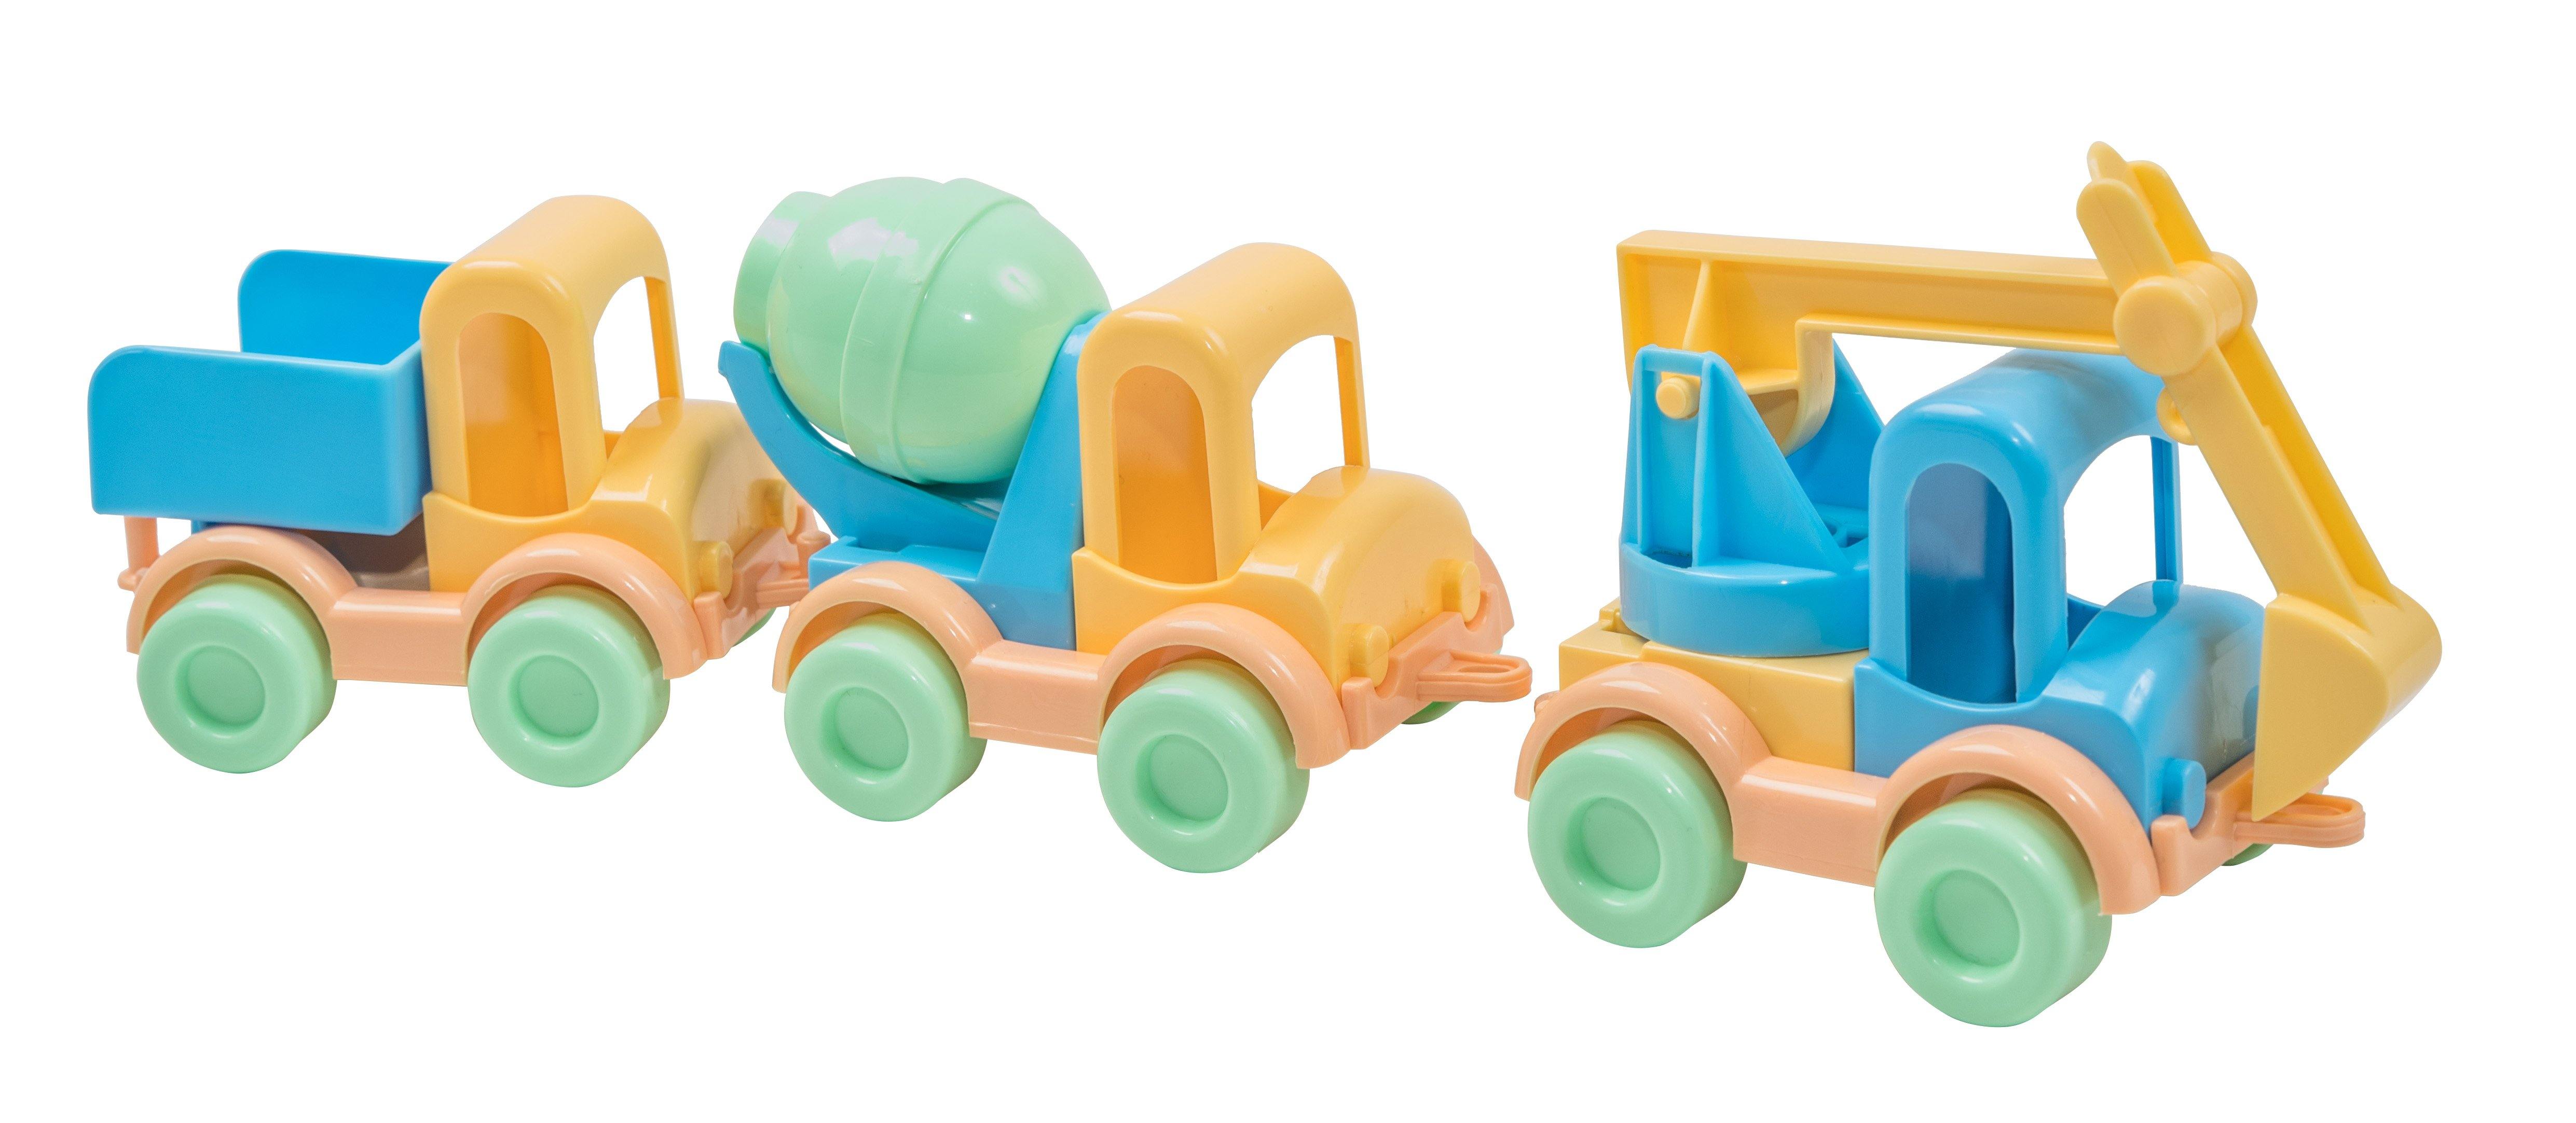 Bioplastic toys - 3 piece vehicle set. - T&M Toys